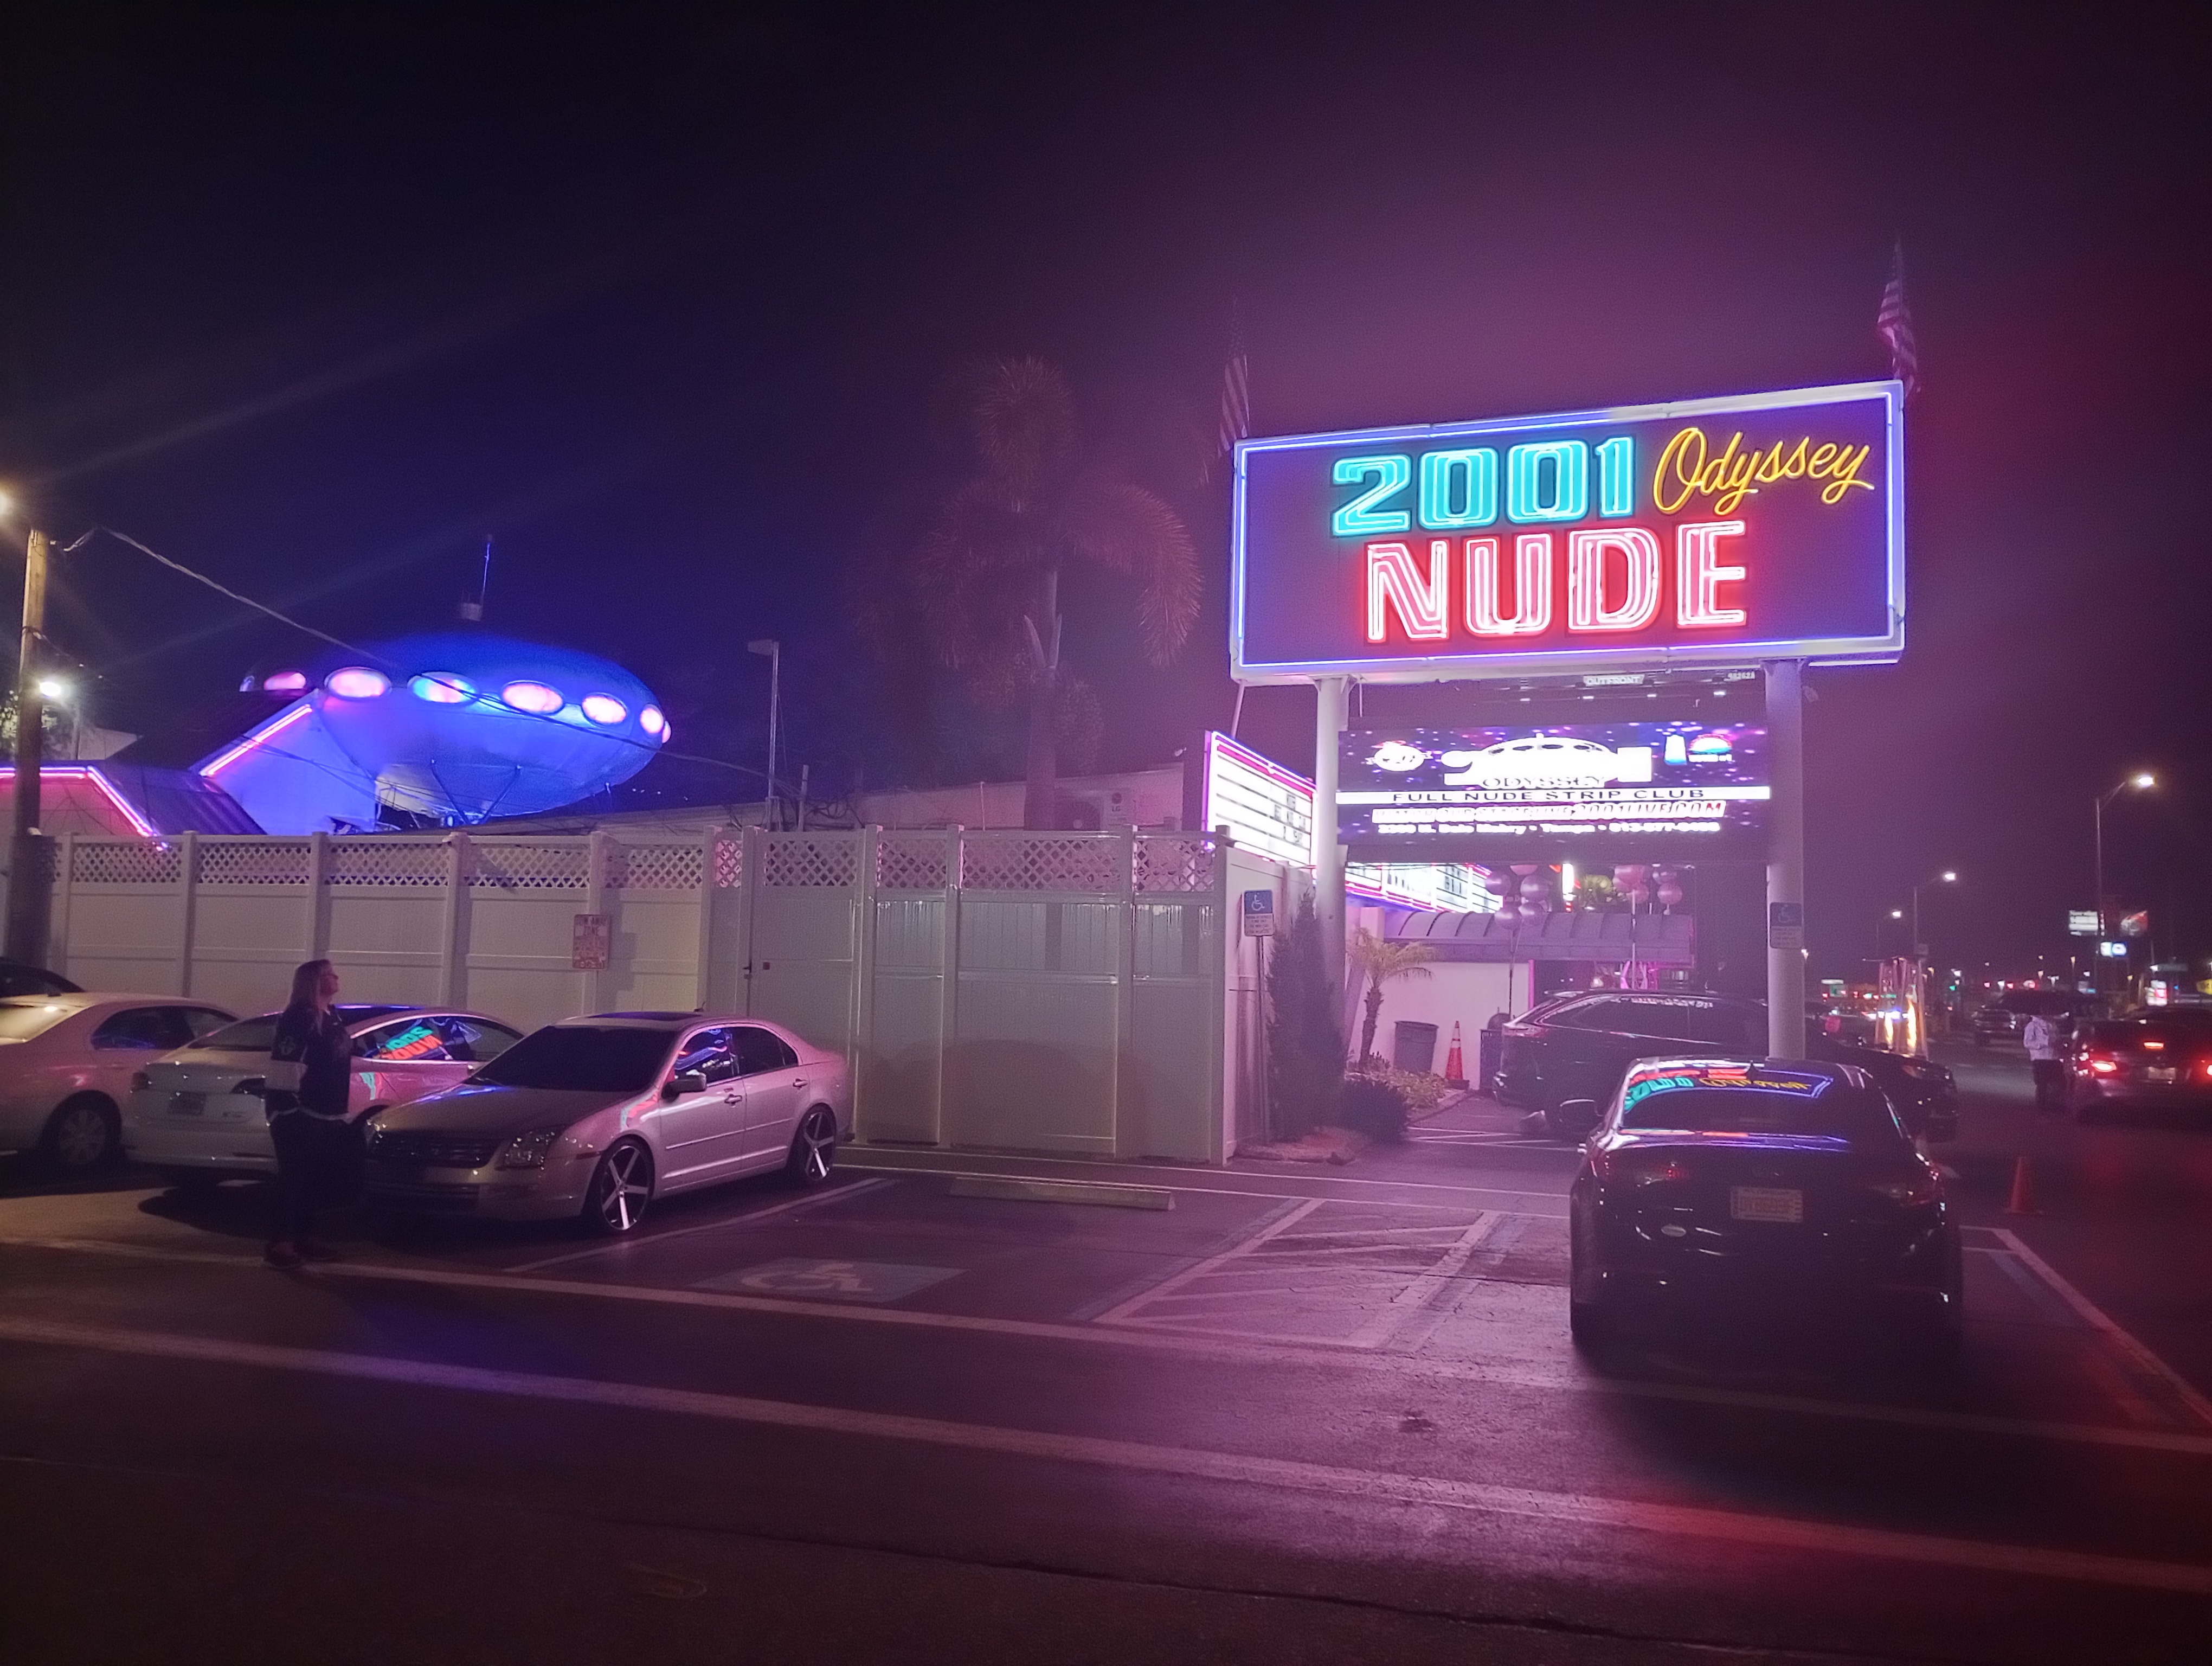 My favorite strip club!